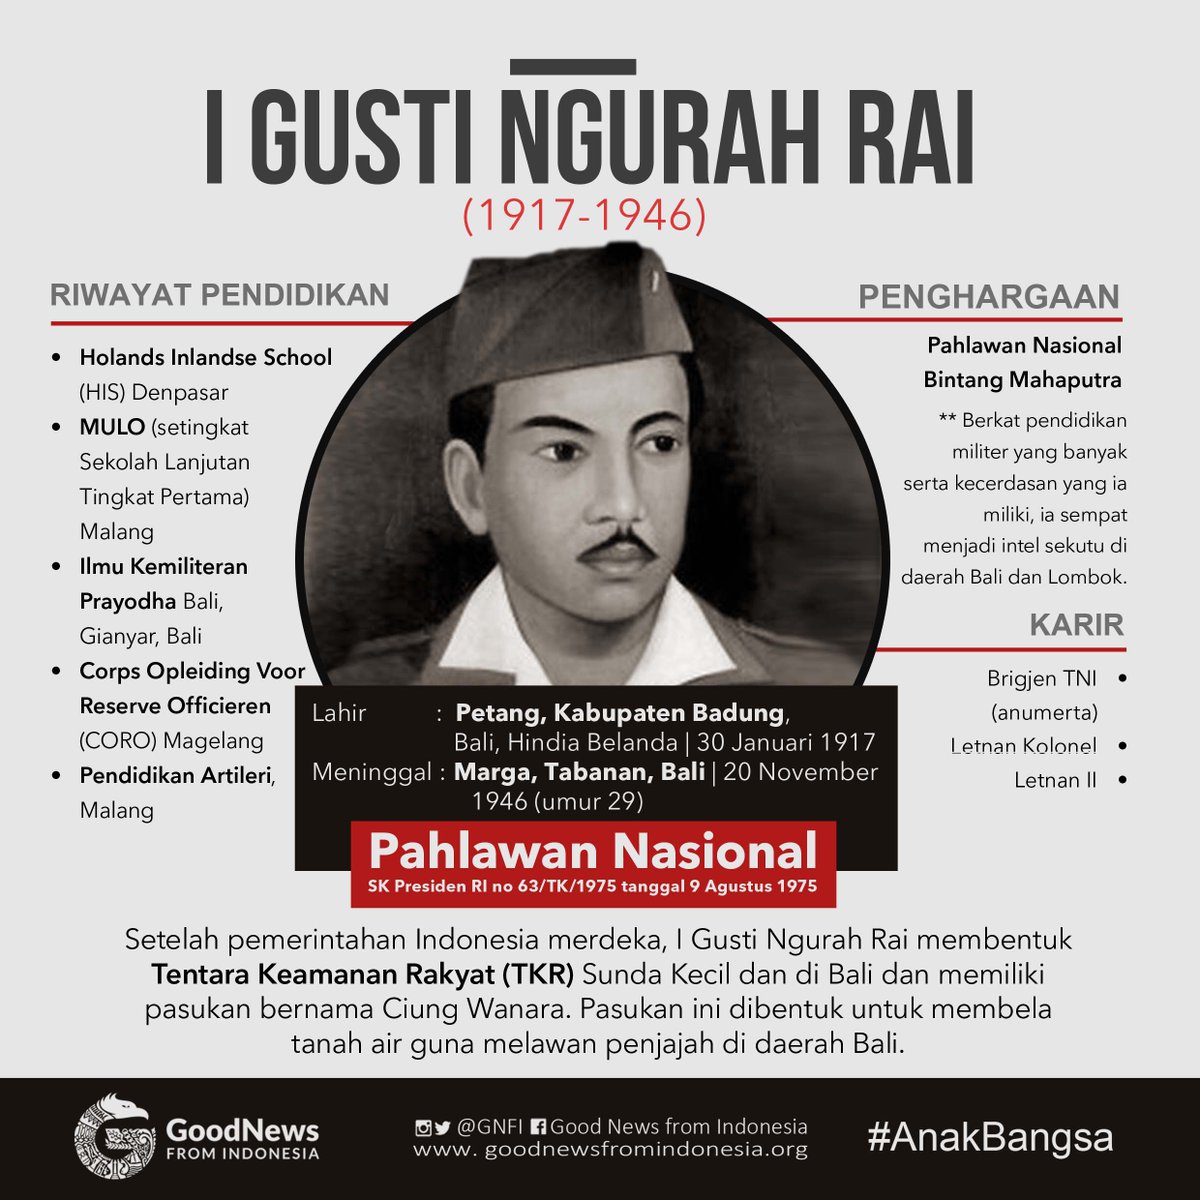 Biografi Gusti Ngurah Rai